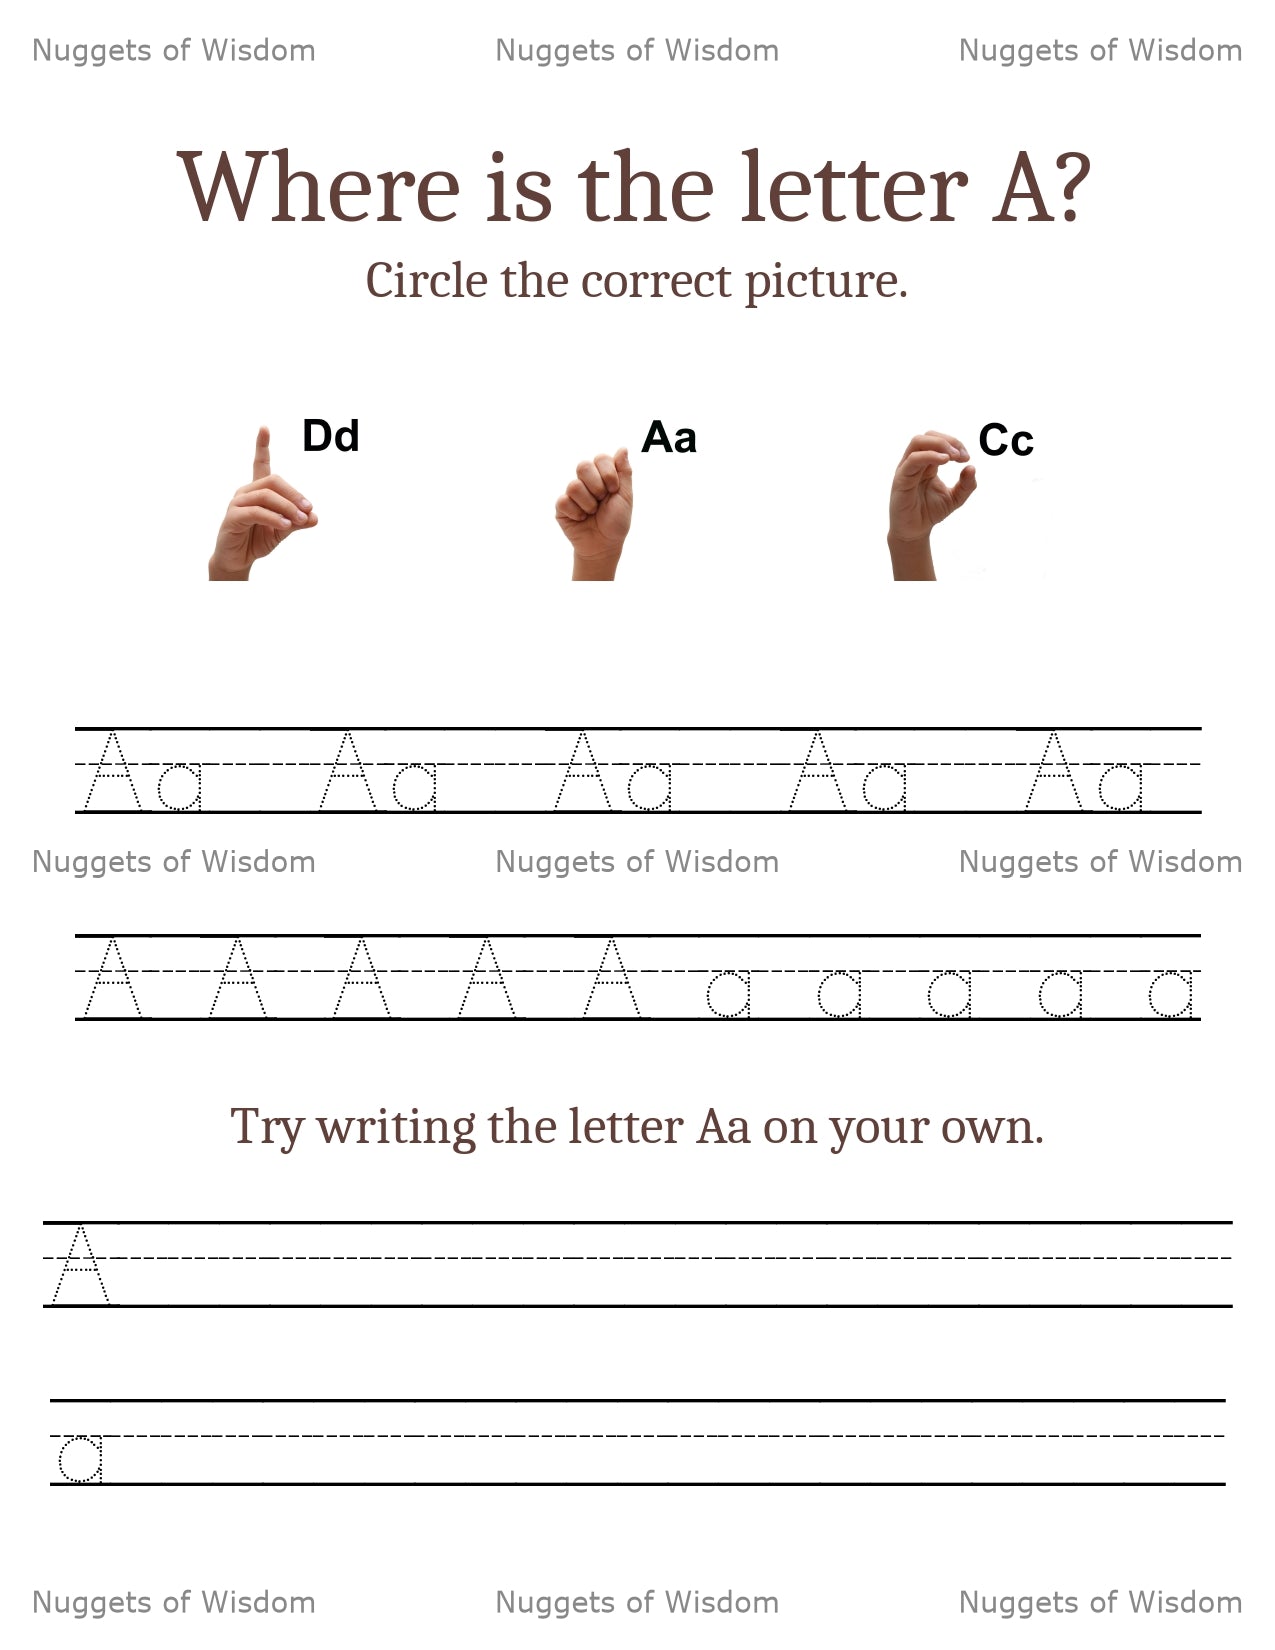 ASL ABC Alphabet Tracing Book